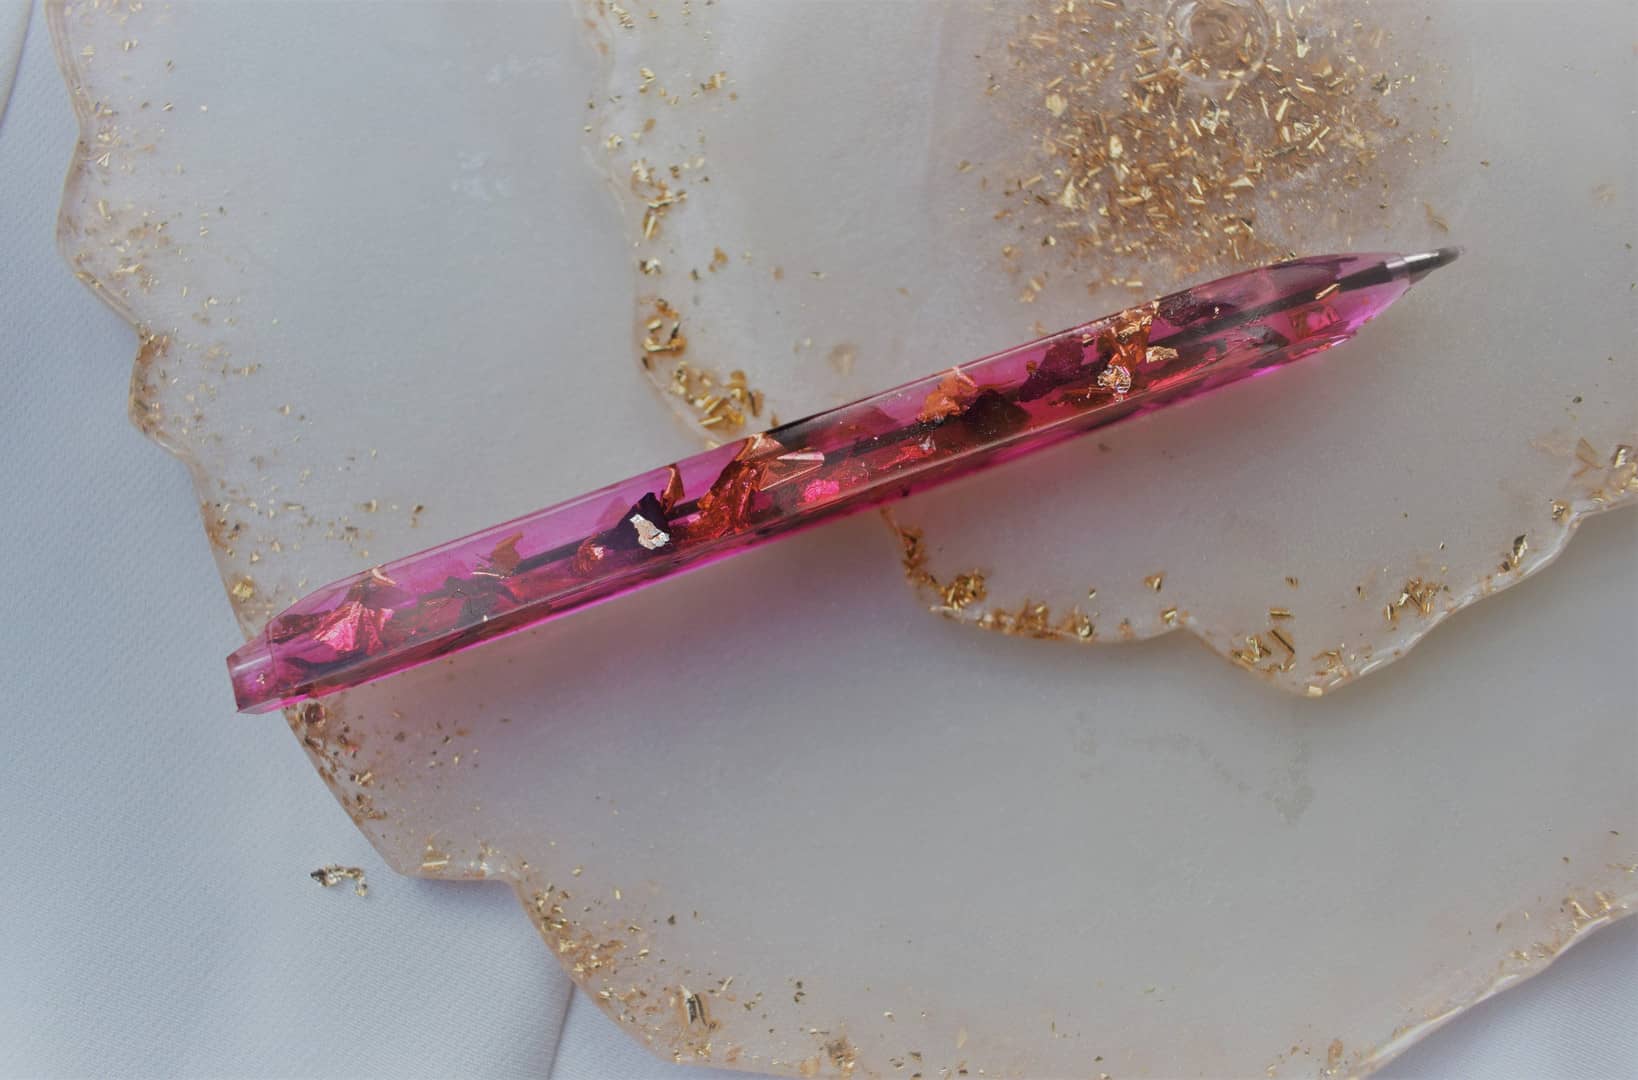 HANDMADE Pink Glitter Rose Quartz Crystal Tray, Epoxy Resin Tray